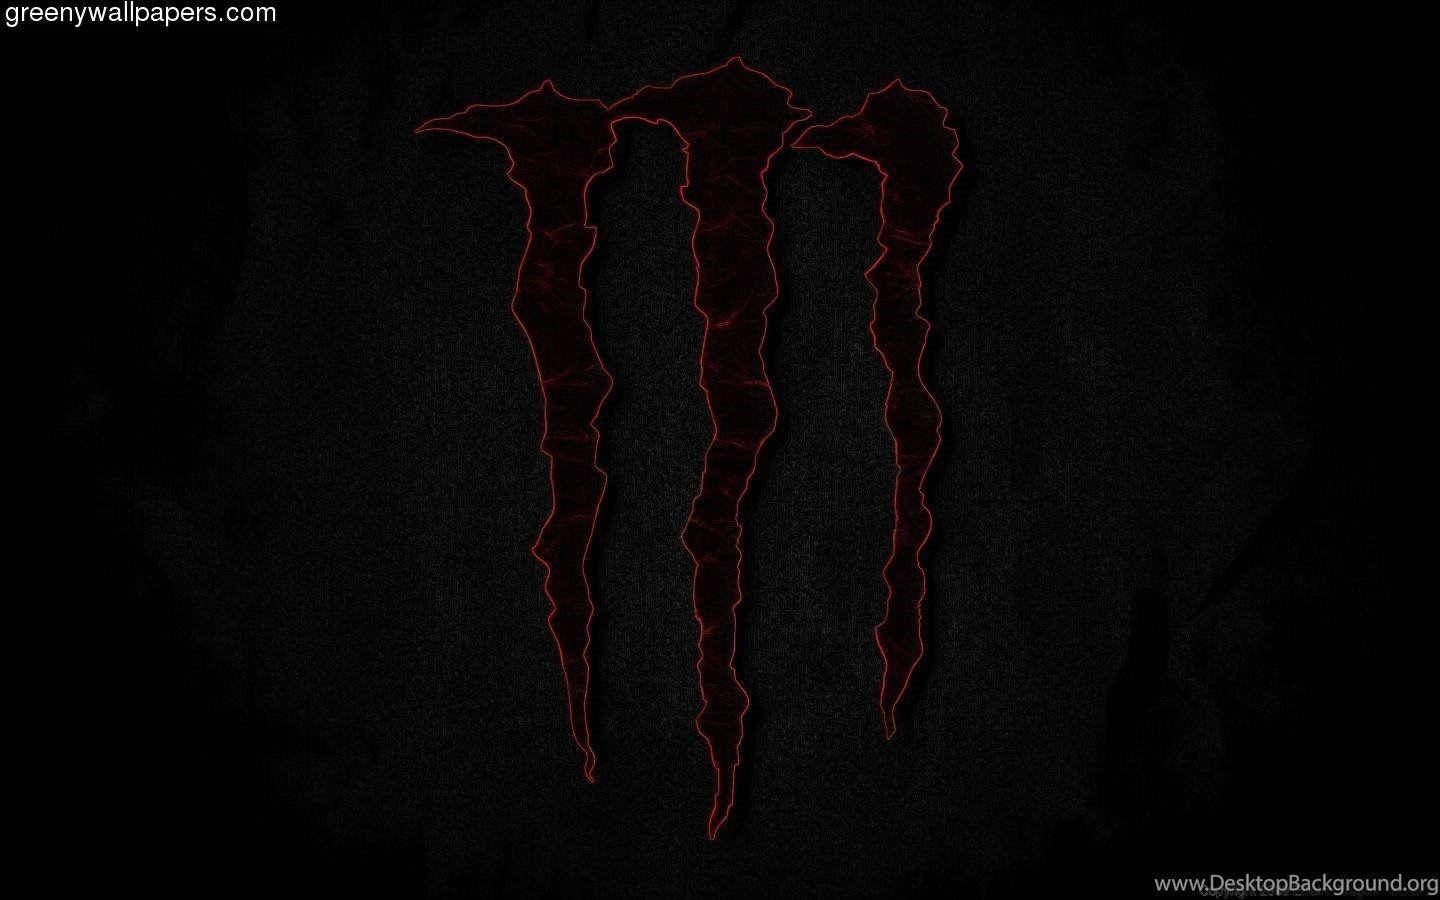 Red Monster Logo Illuminated On Dark Screen Wallpaper